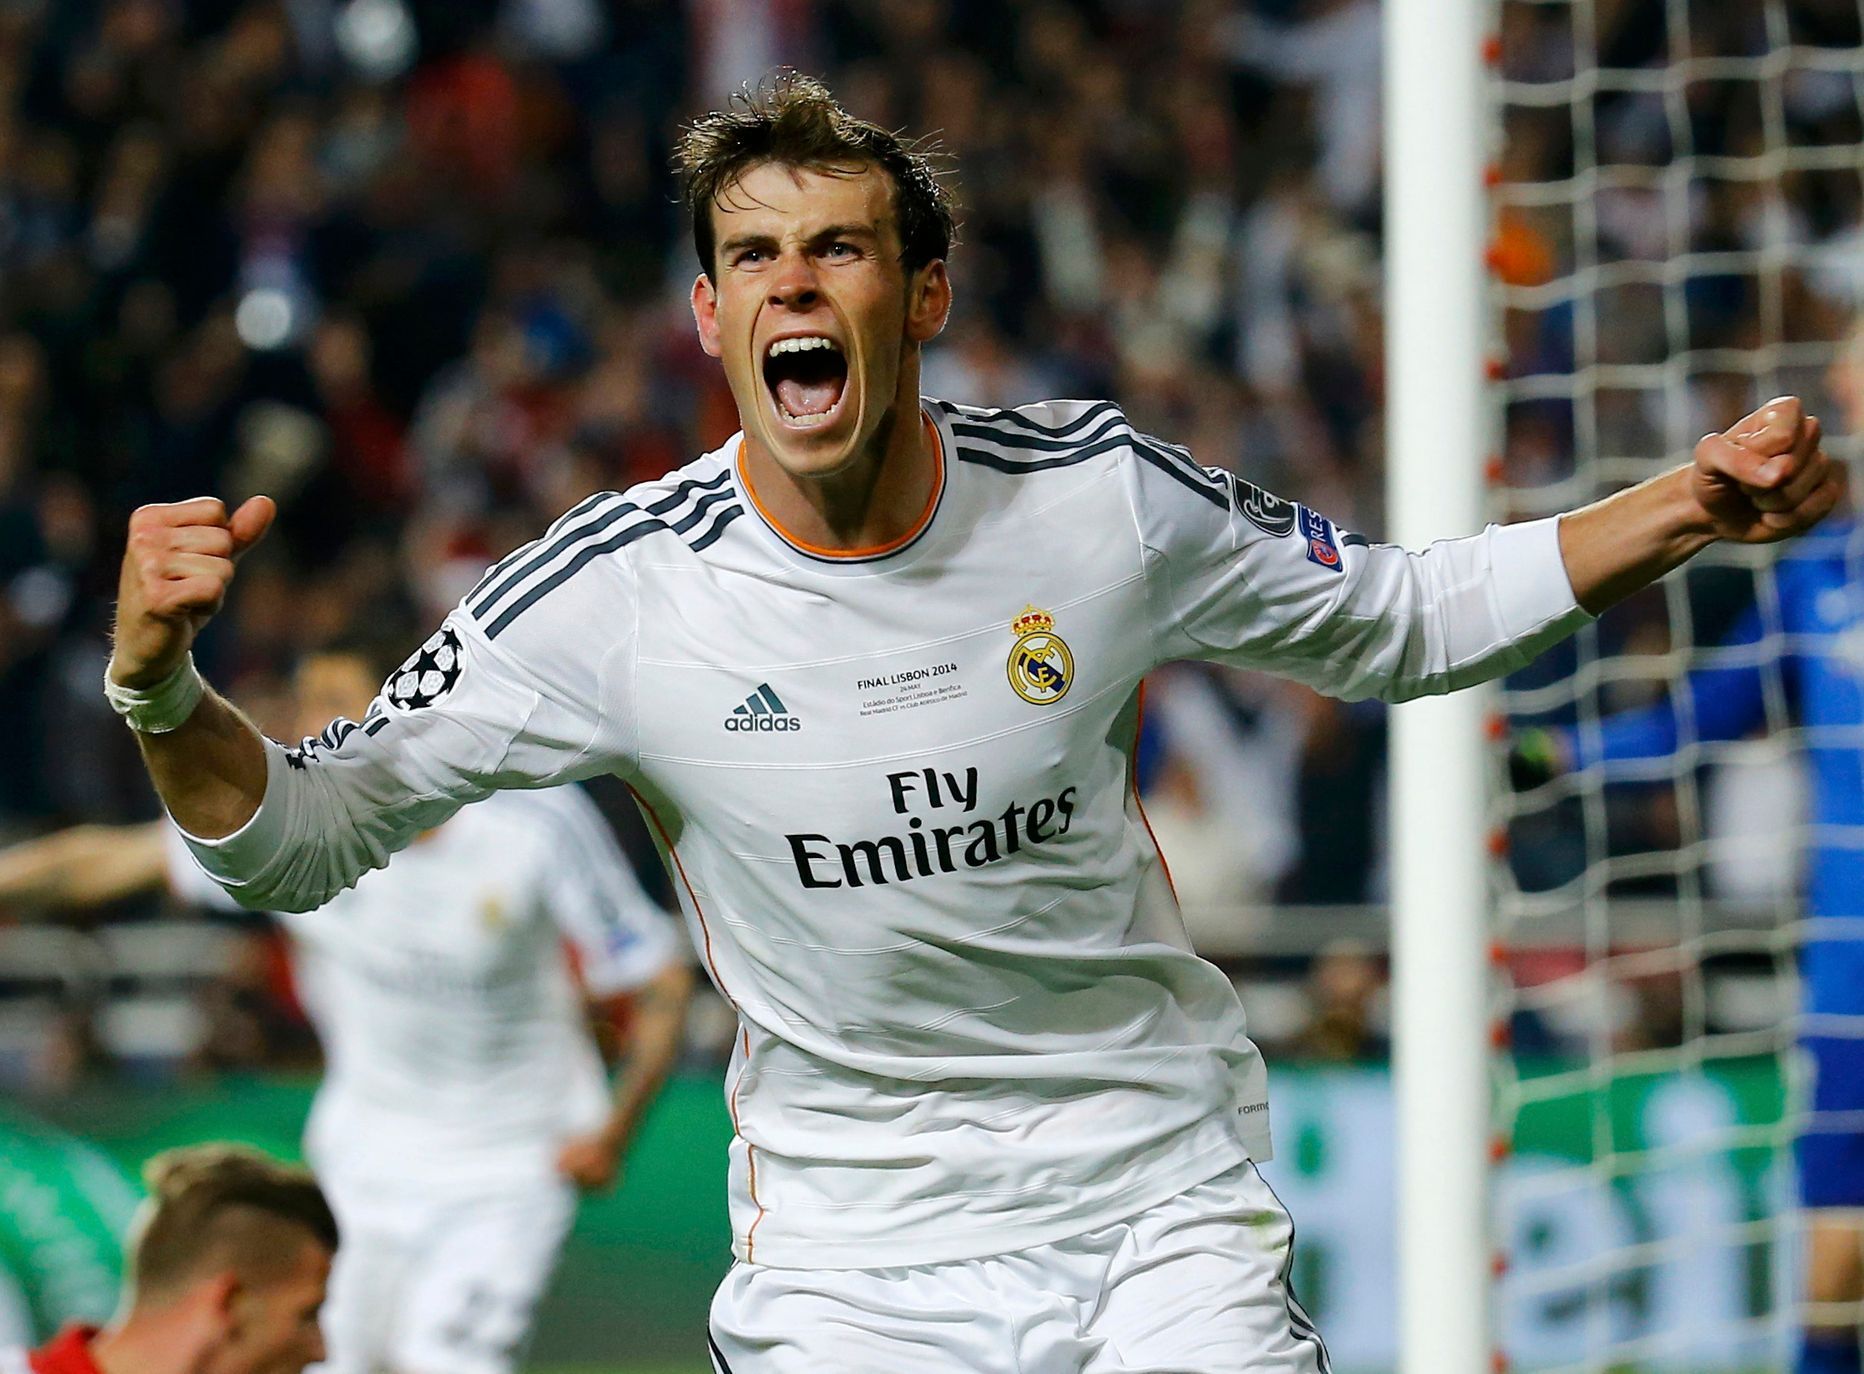 Finále LM, Real-Atlético: Gareth Bale slaví gól